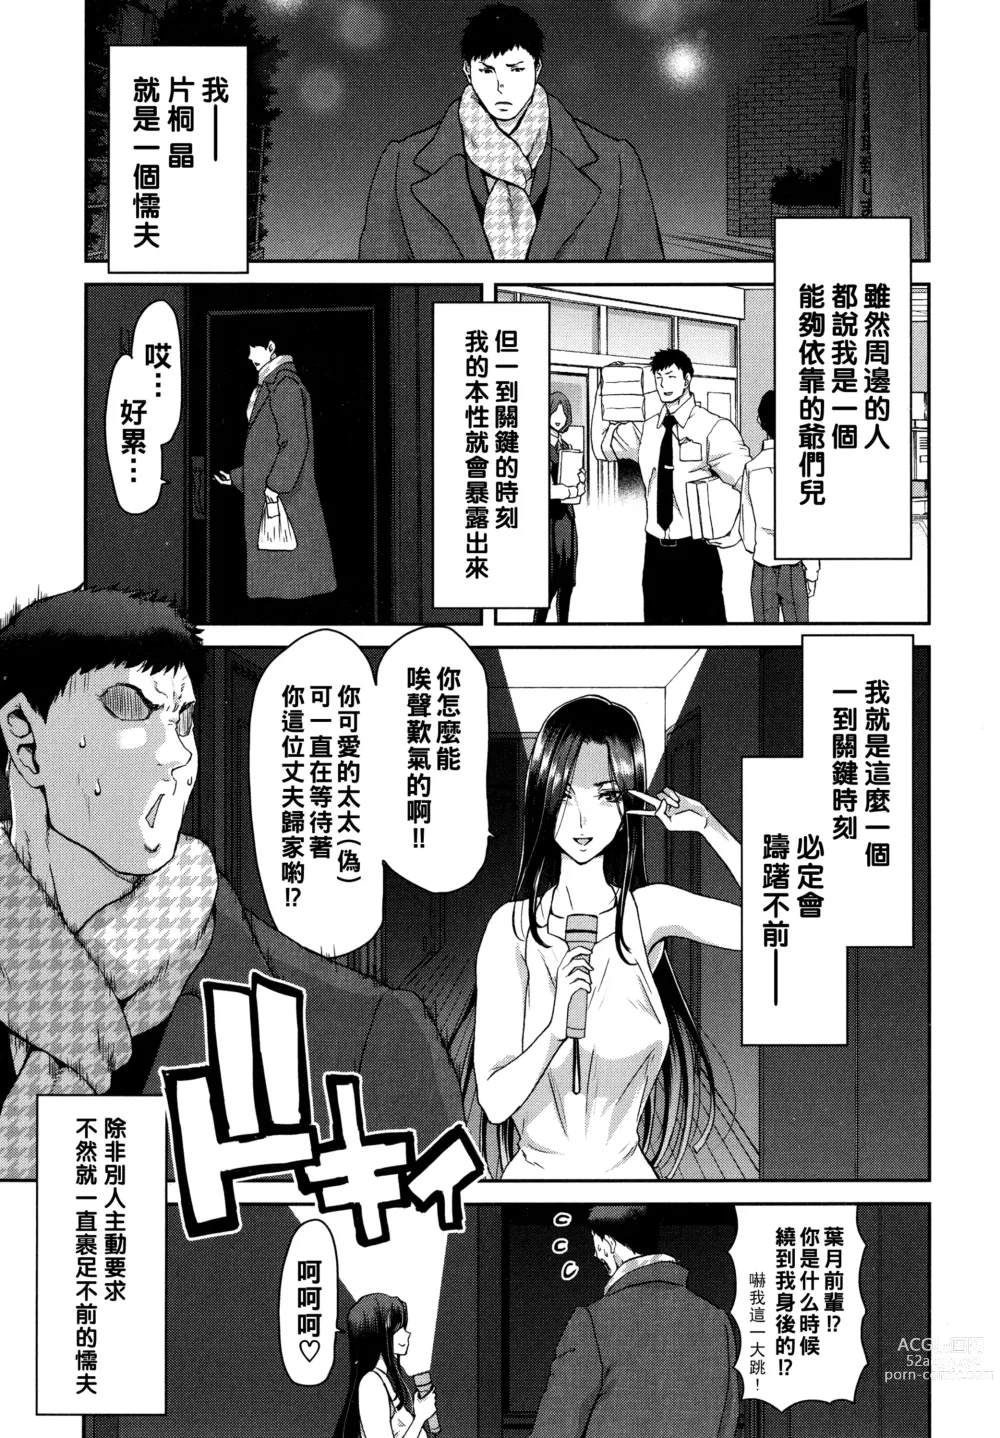 Page 5 of manga Iede Onna o Hirottara - When I picked up a runaway girl.